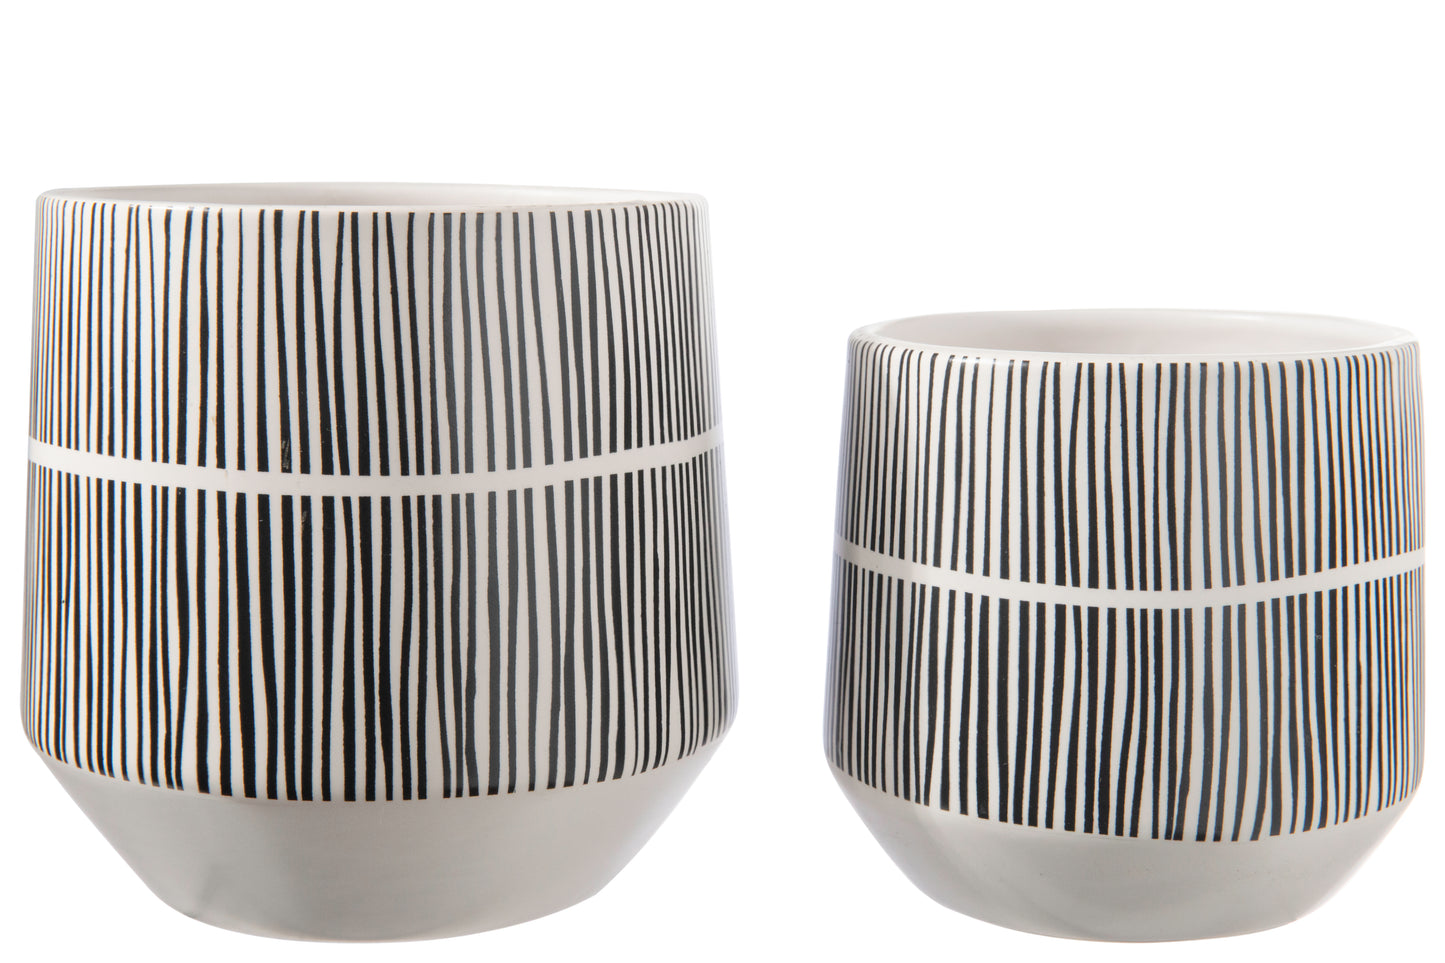 Ceramic Round Pot with Black Optical Illusion Pattern Design Body, Set of 2